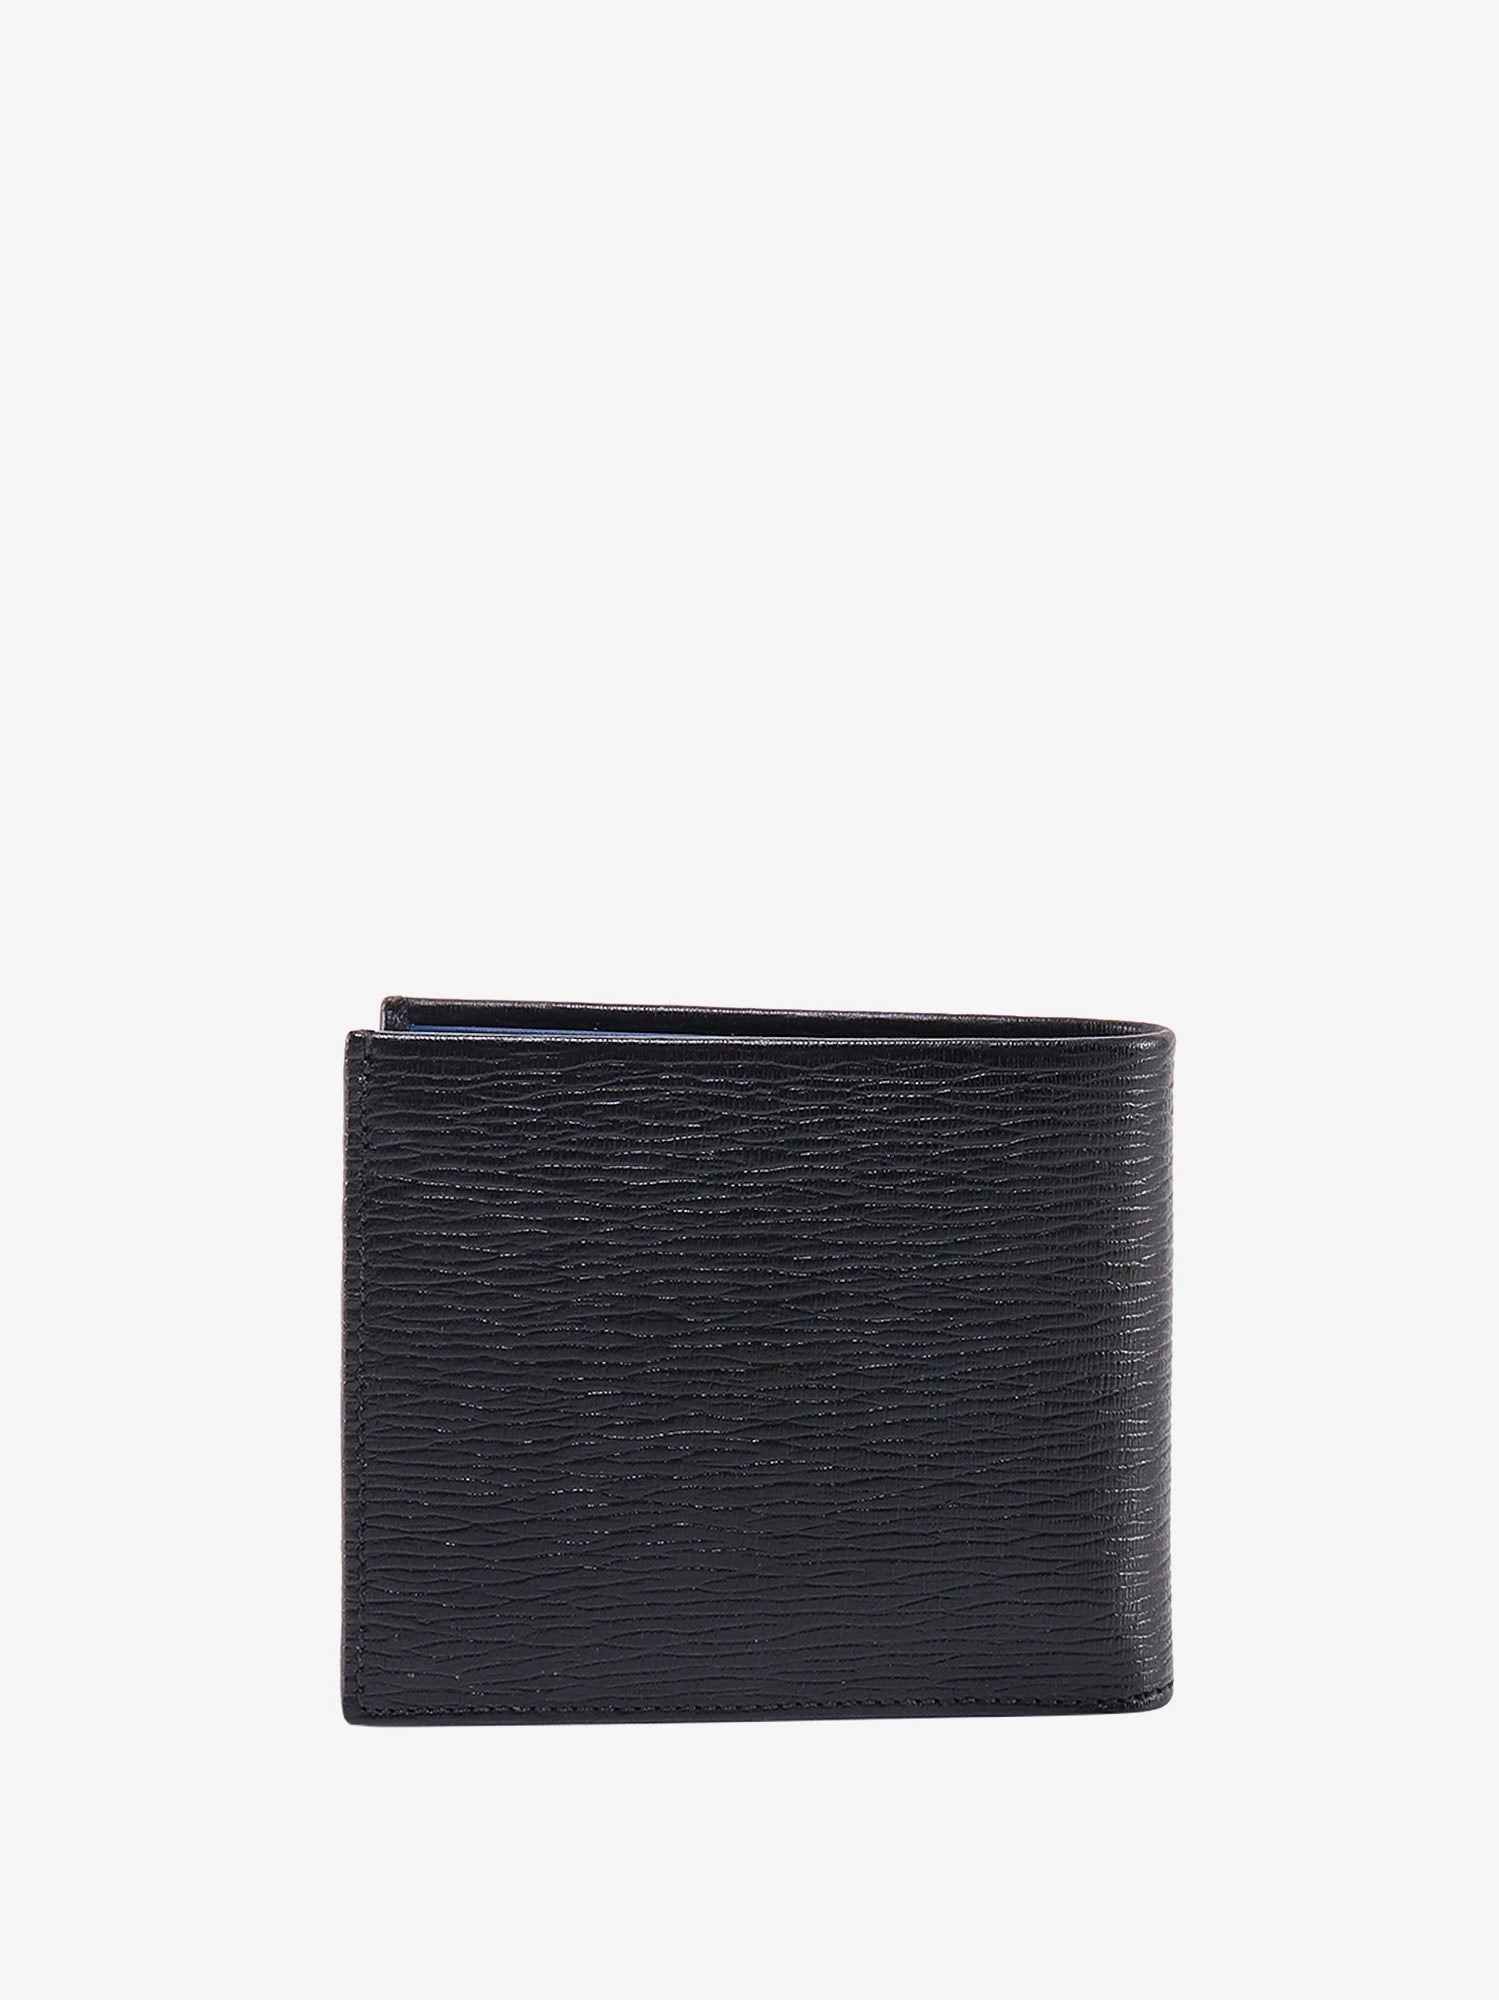 Buy Ferragamo Embossed Gancini Wallet in Hammered Leather